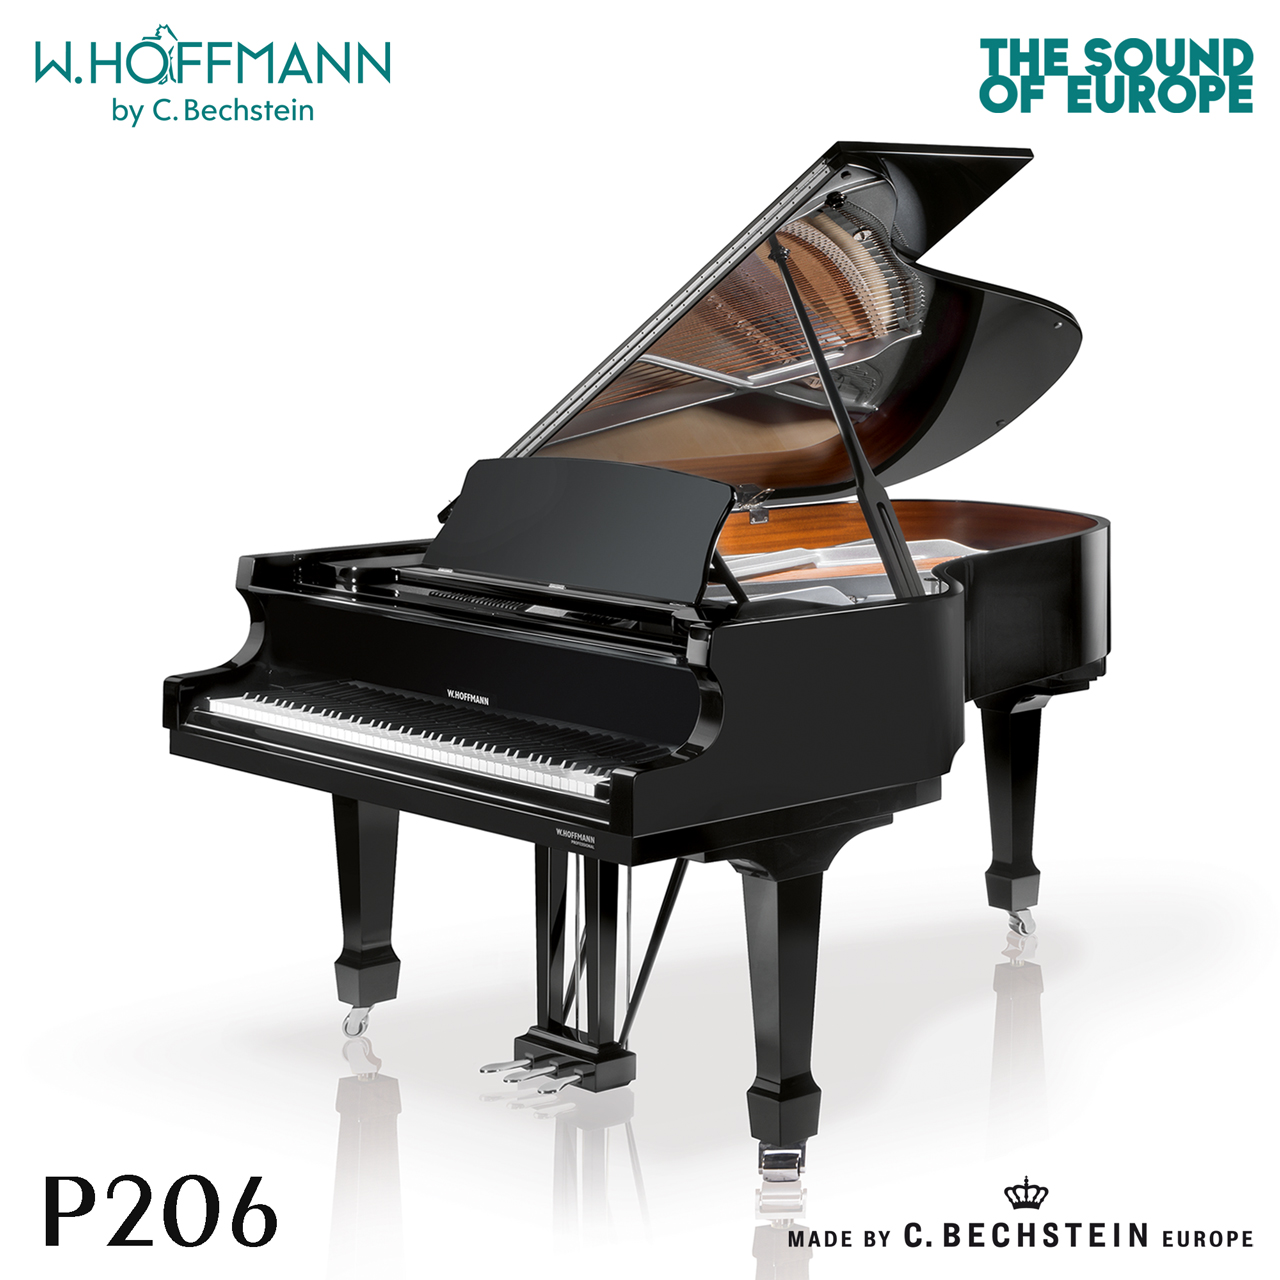 ĐÀN PIANO GRAND W. HOFFMANN P206 (TỪ 1.798 TRIỆU)